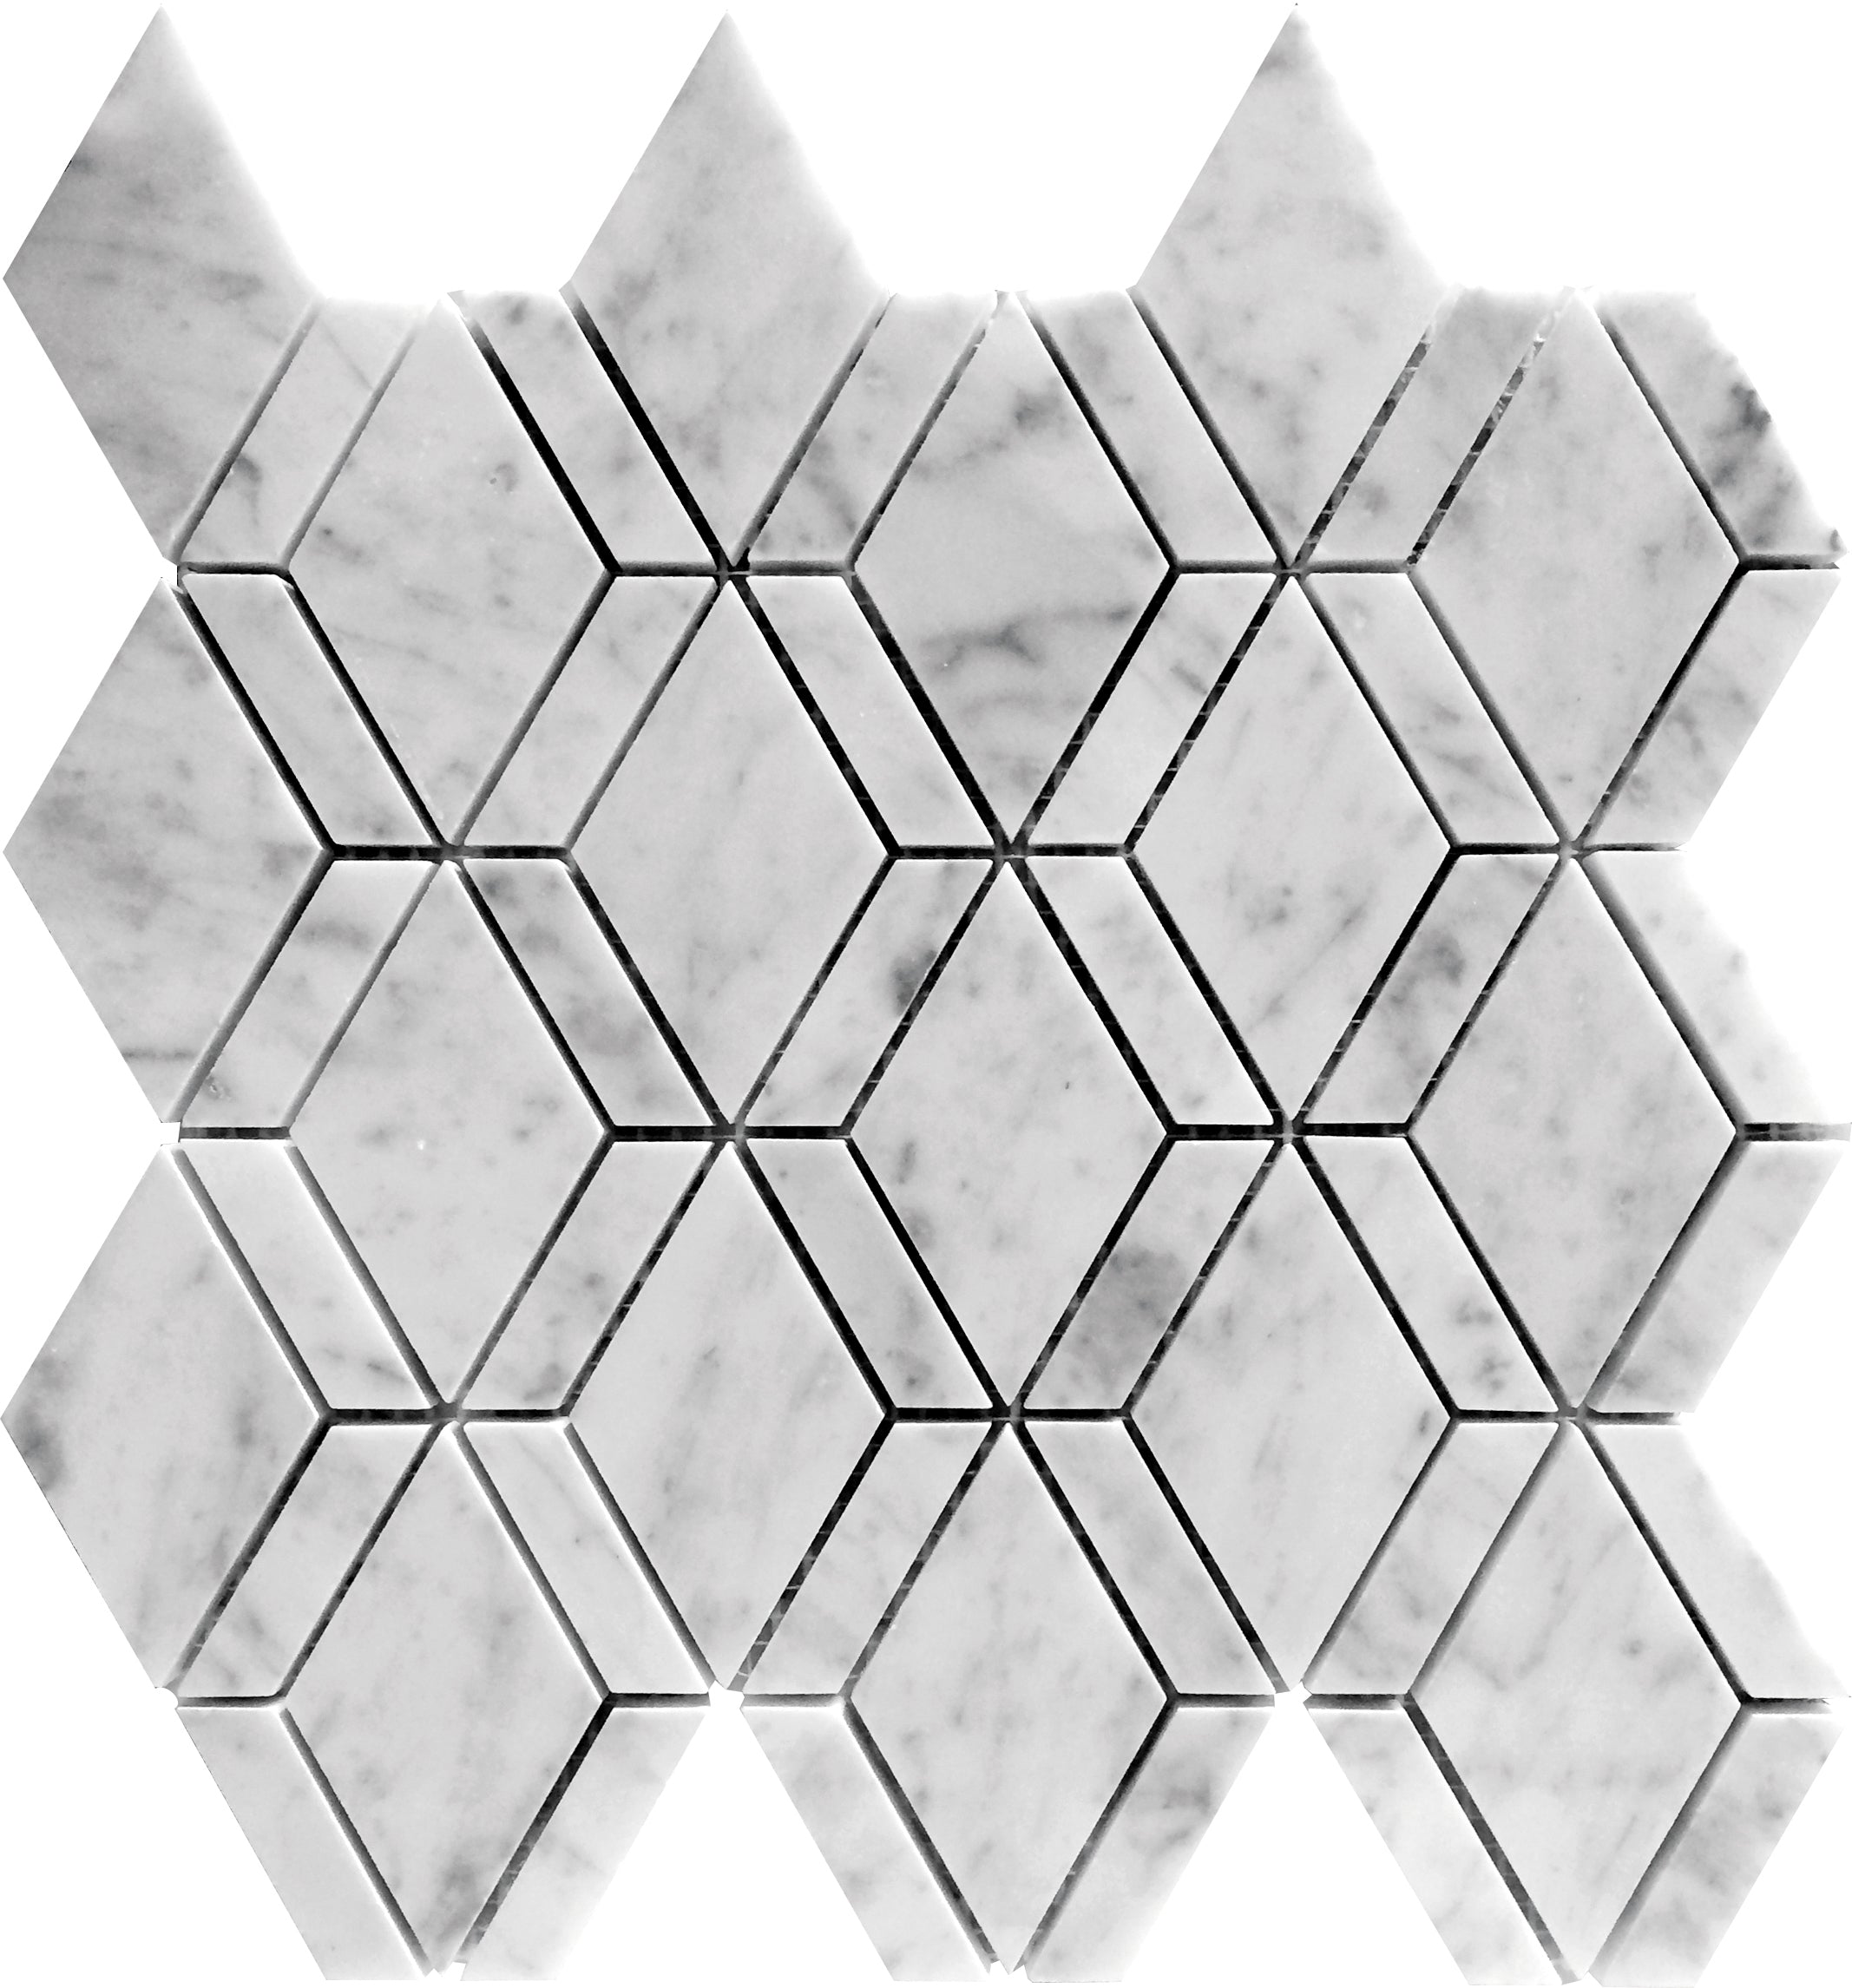 mir natural line dc metro diamond bianco carrara wall and floor mosaic distributed by surface group natural materials